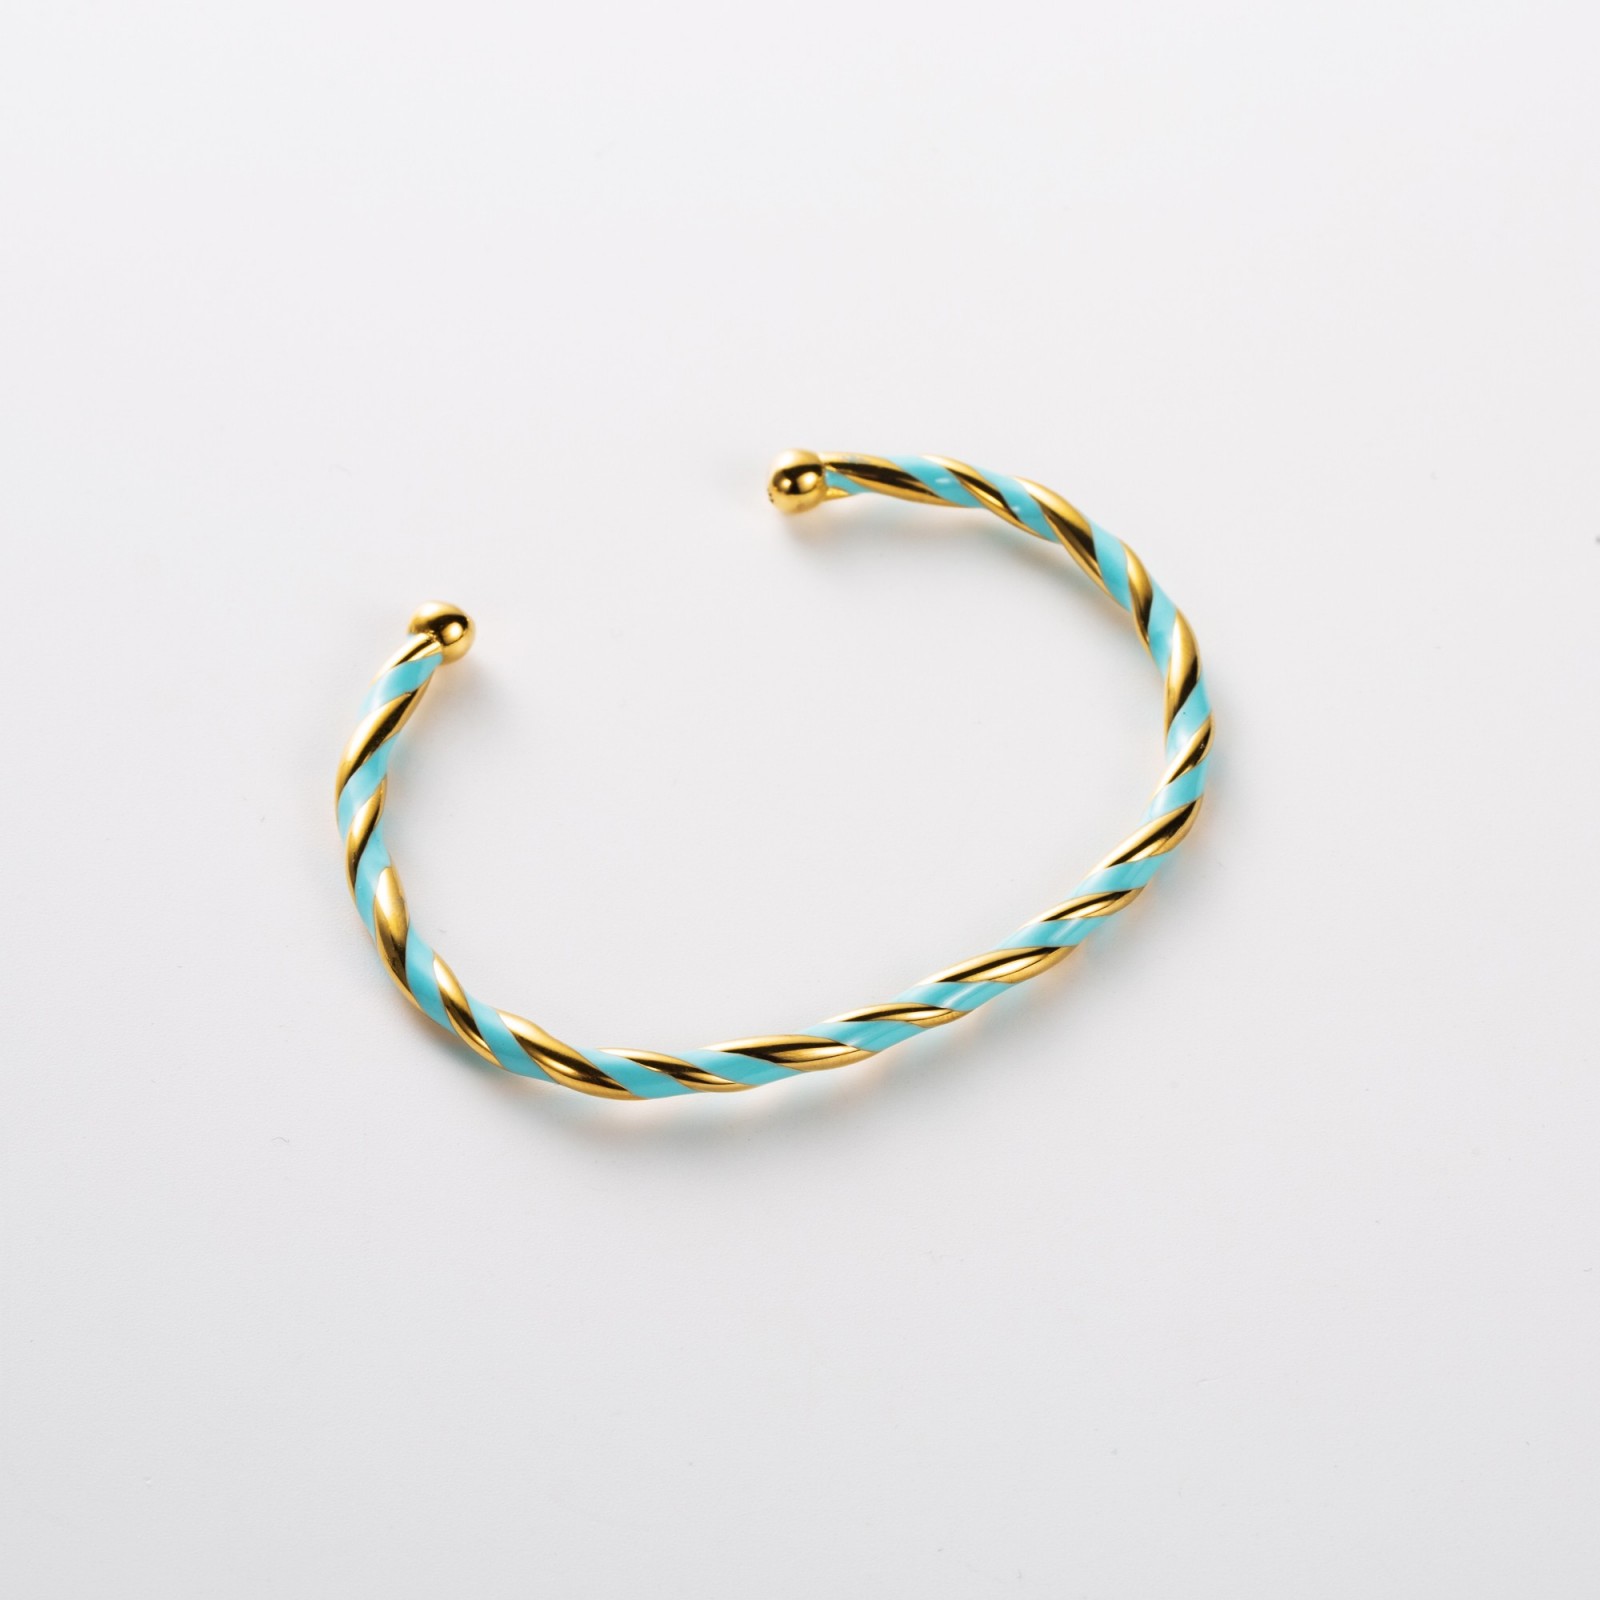 Colored Twisted Necklace Bracelet Color:Blue